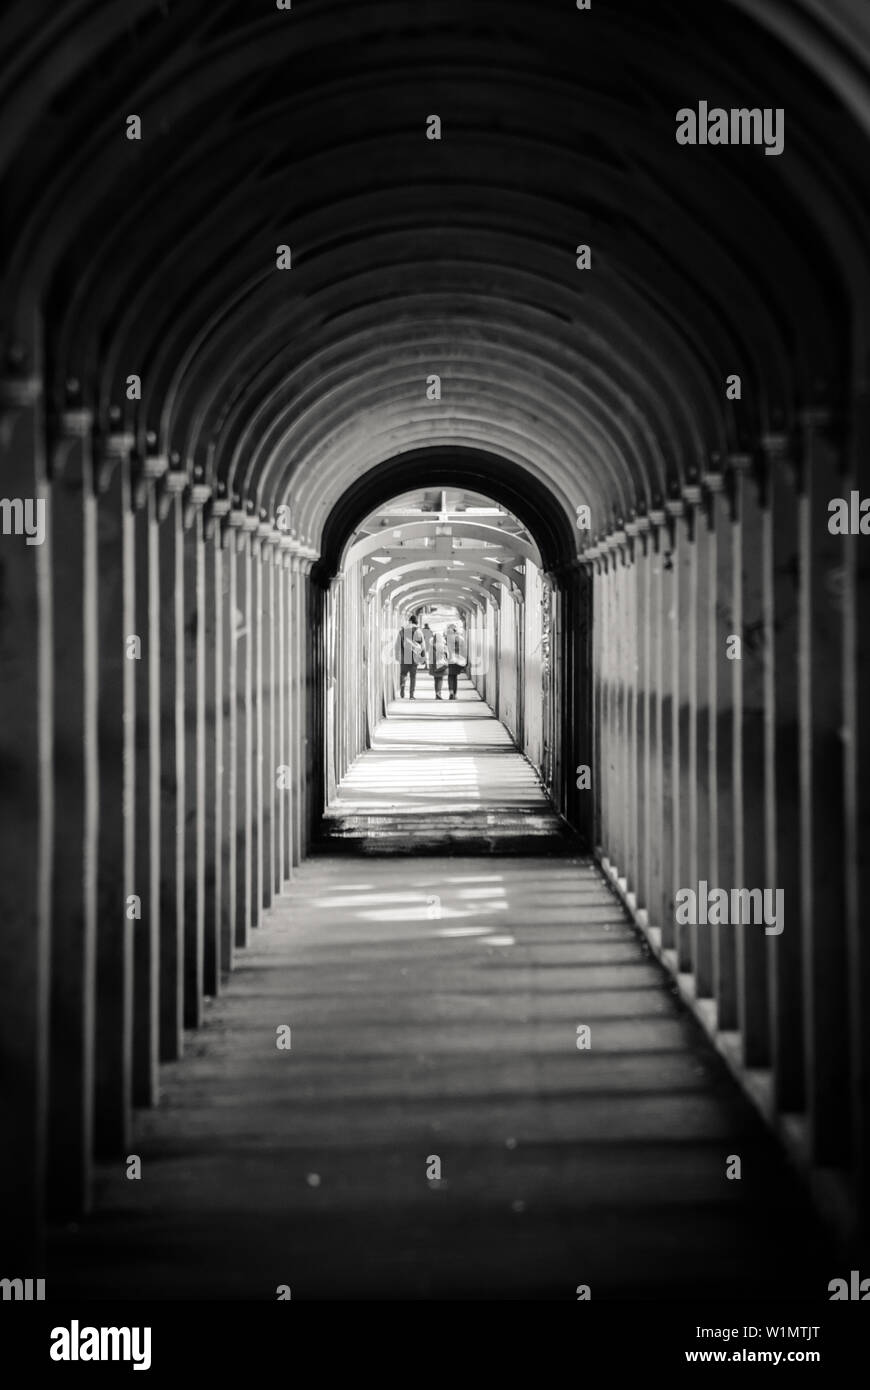 arch hallway architecture tunnel Stock Photo - Alamy